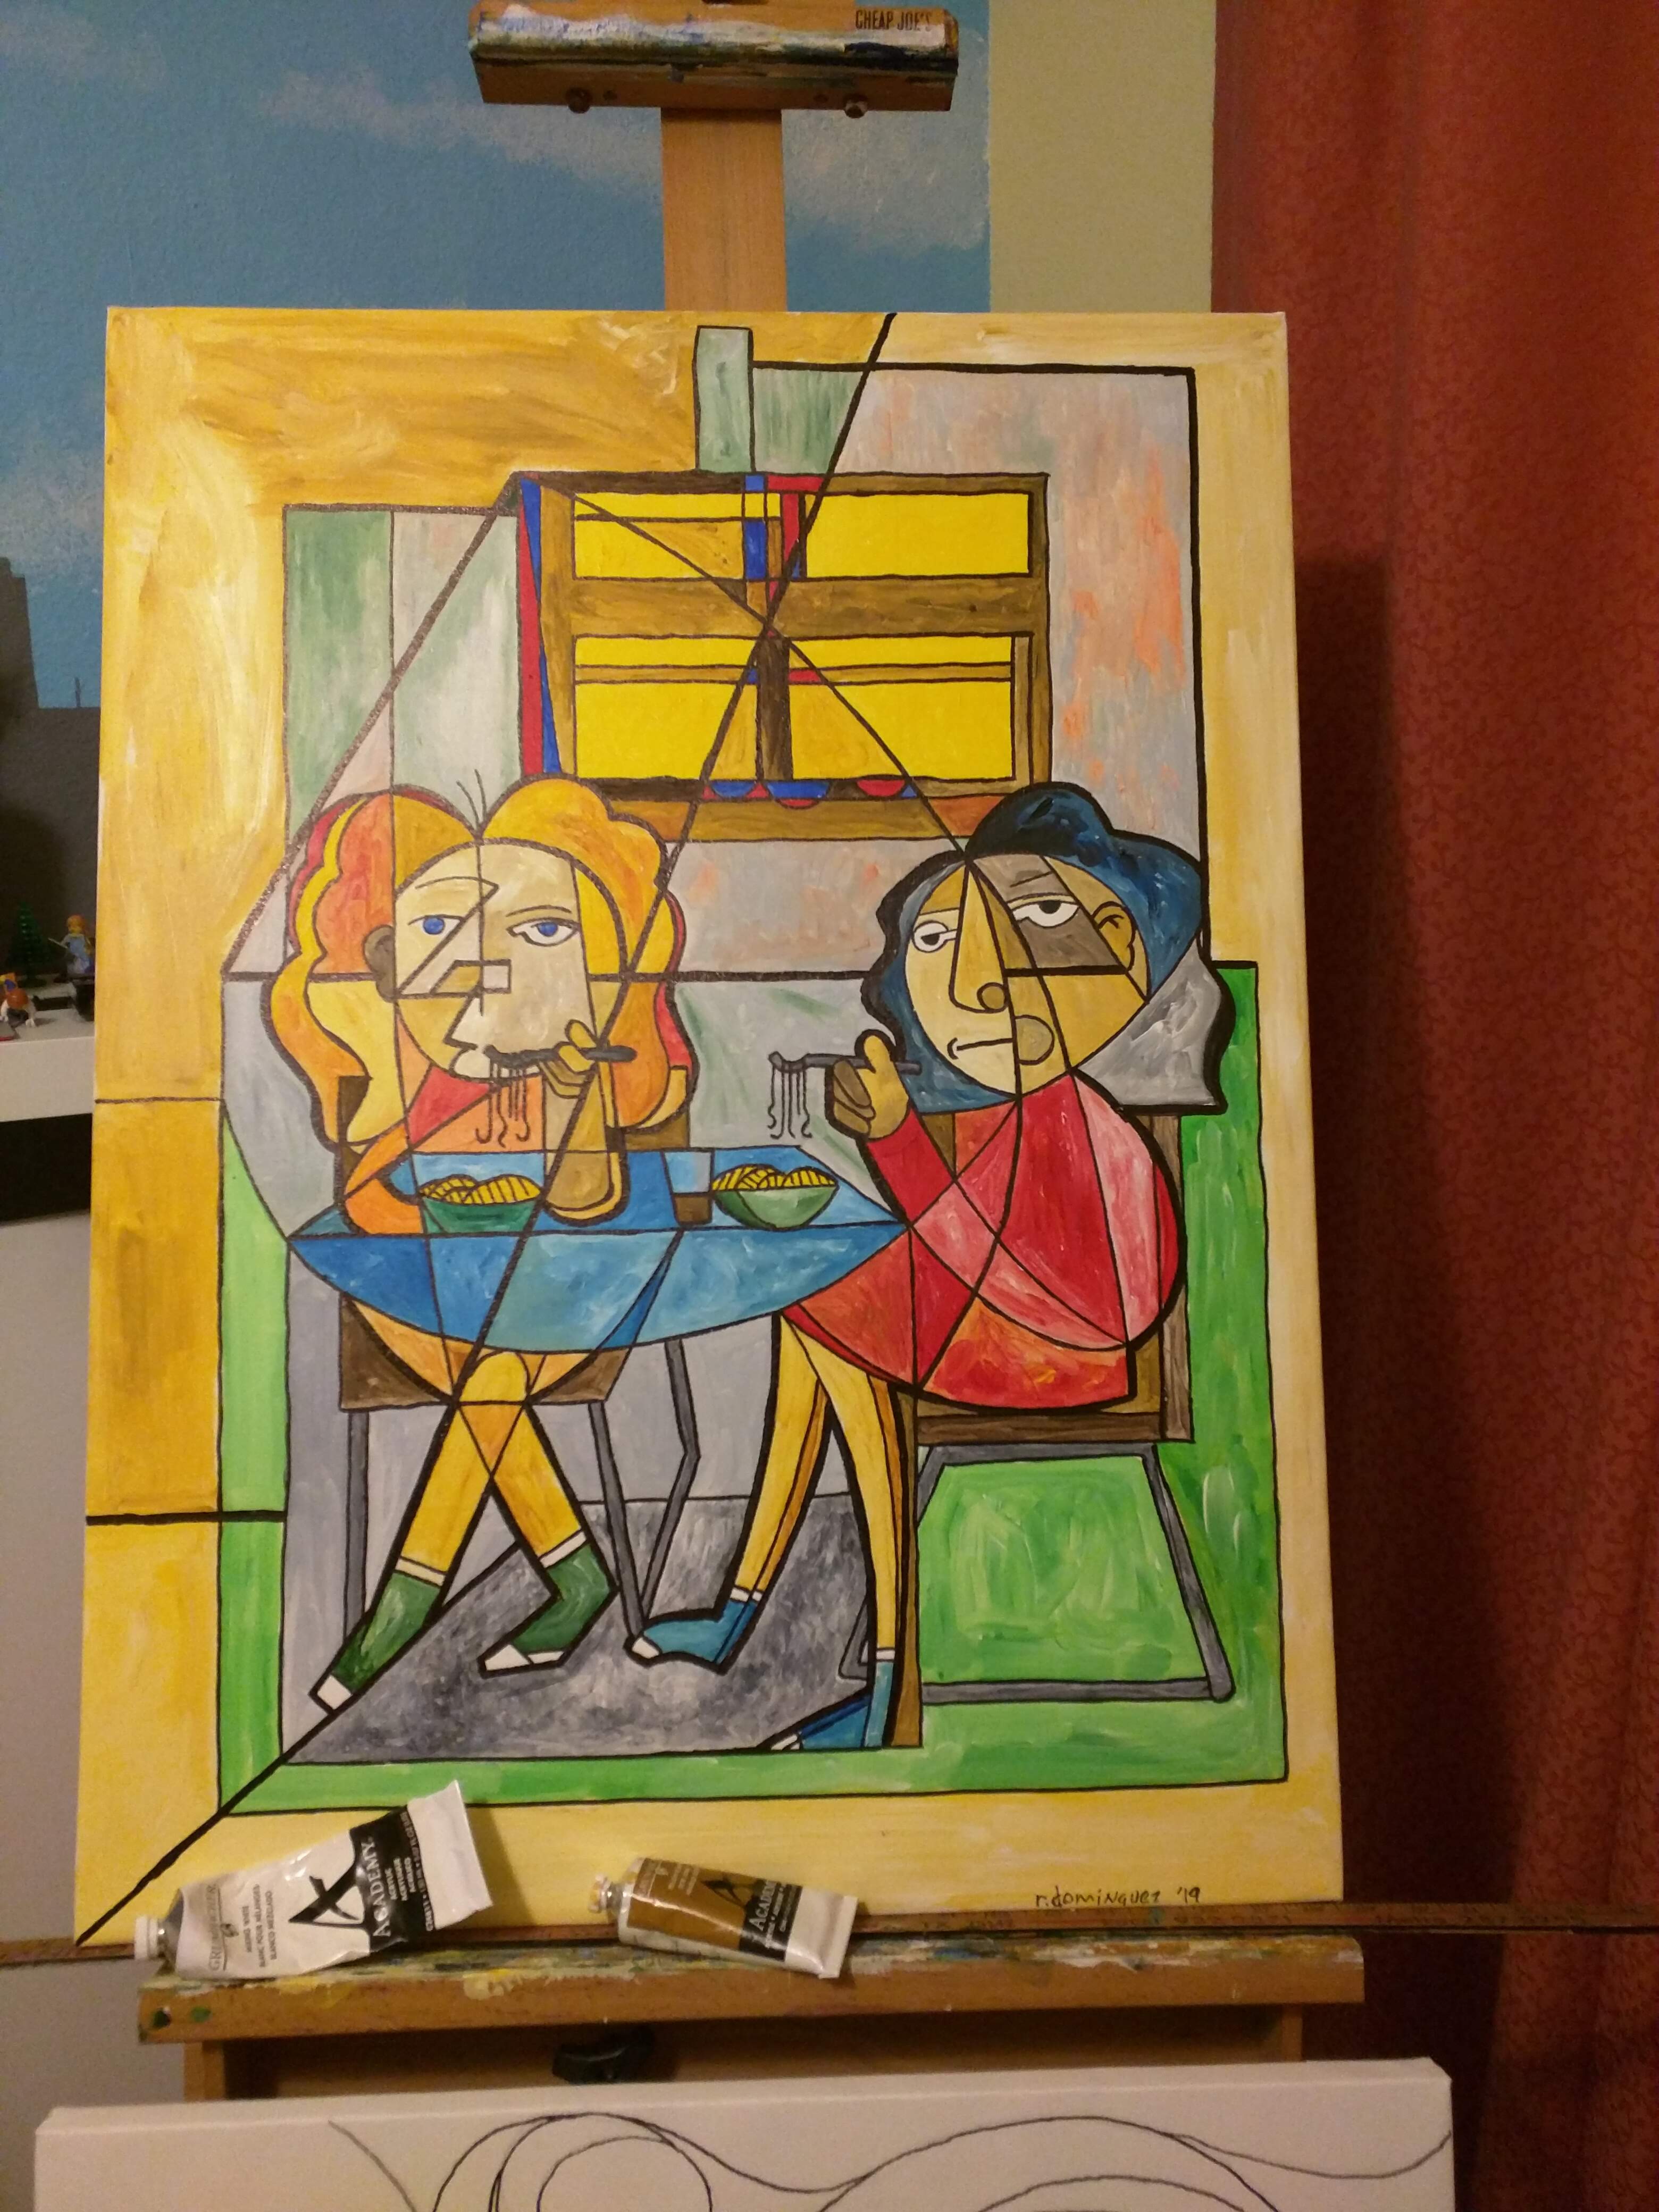 Painting of two Girls eating ramen